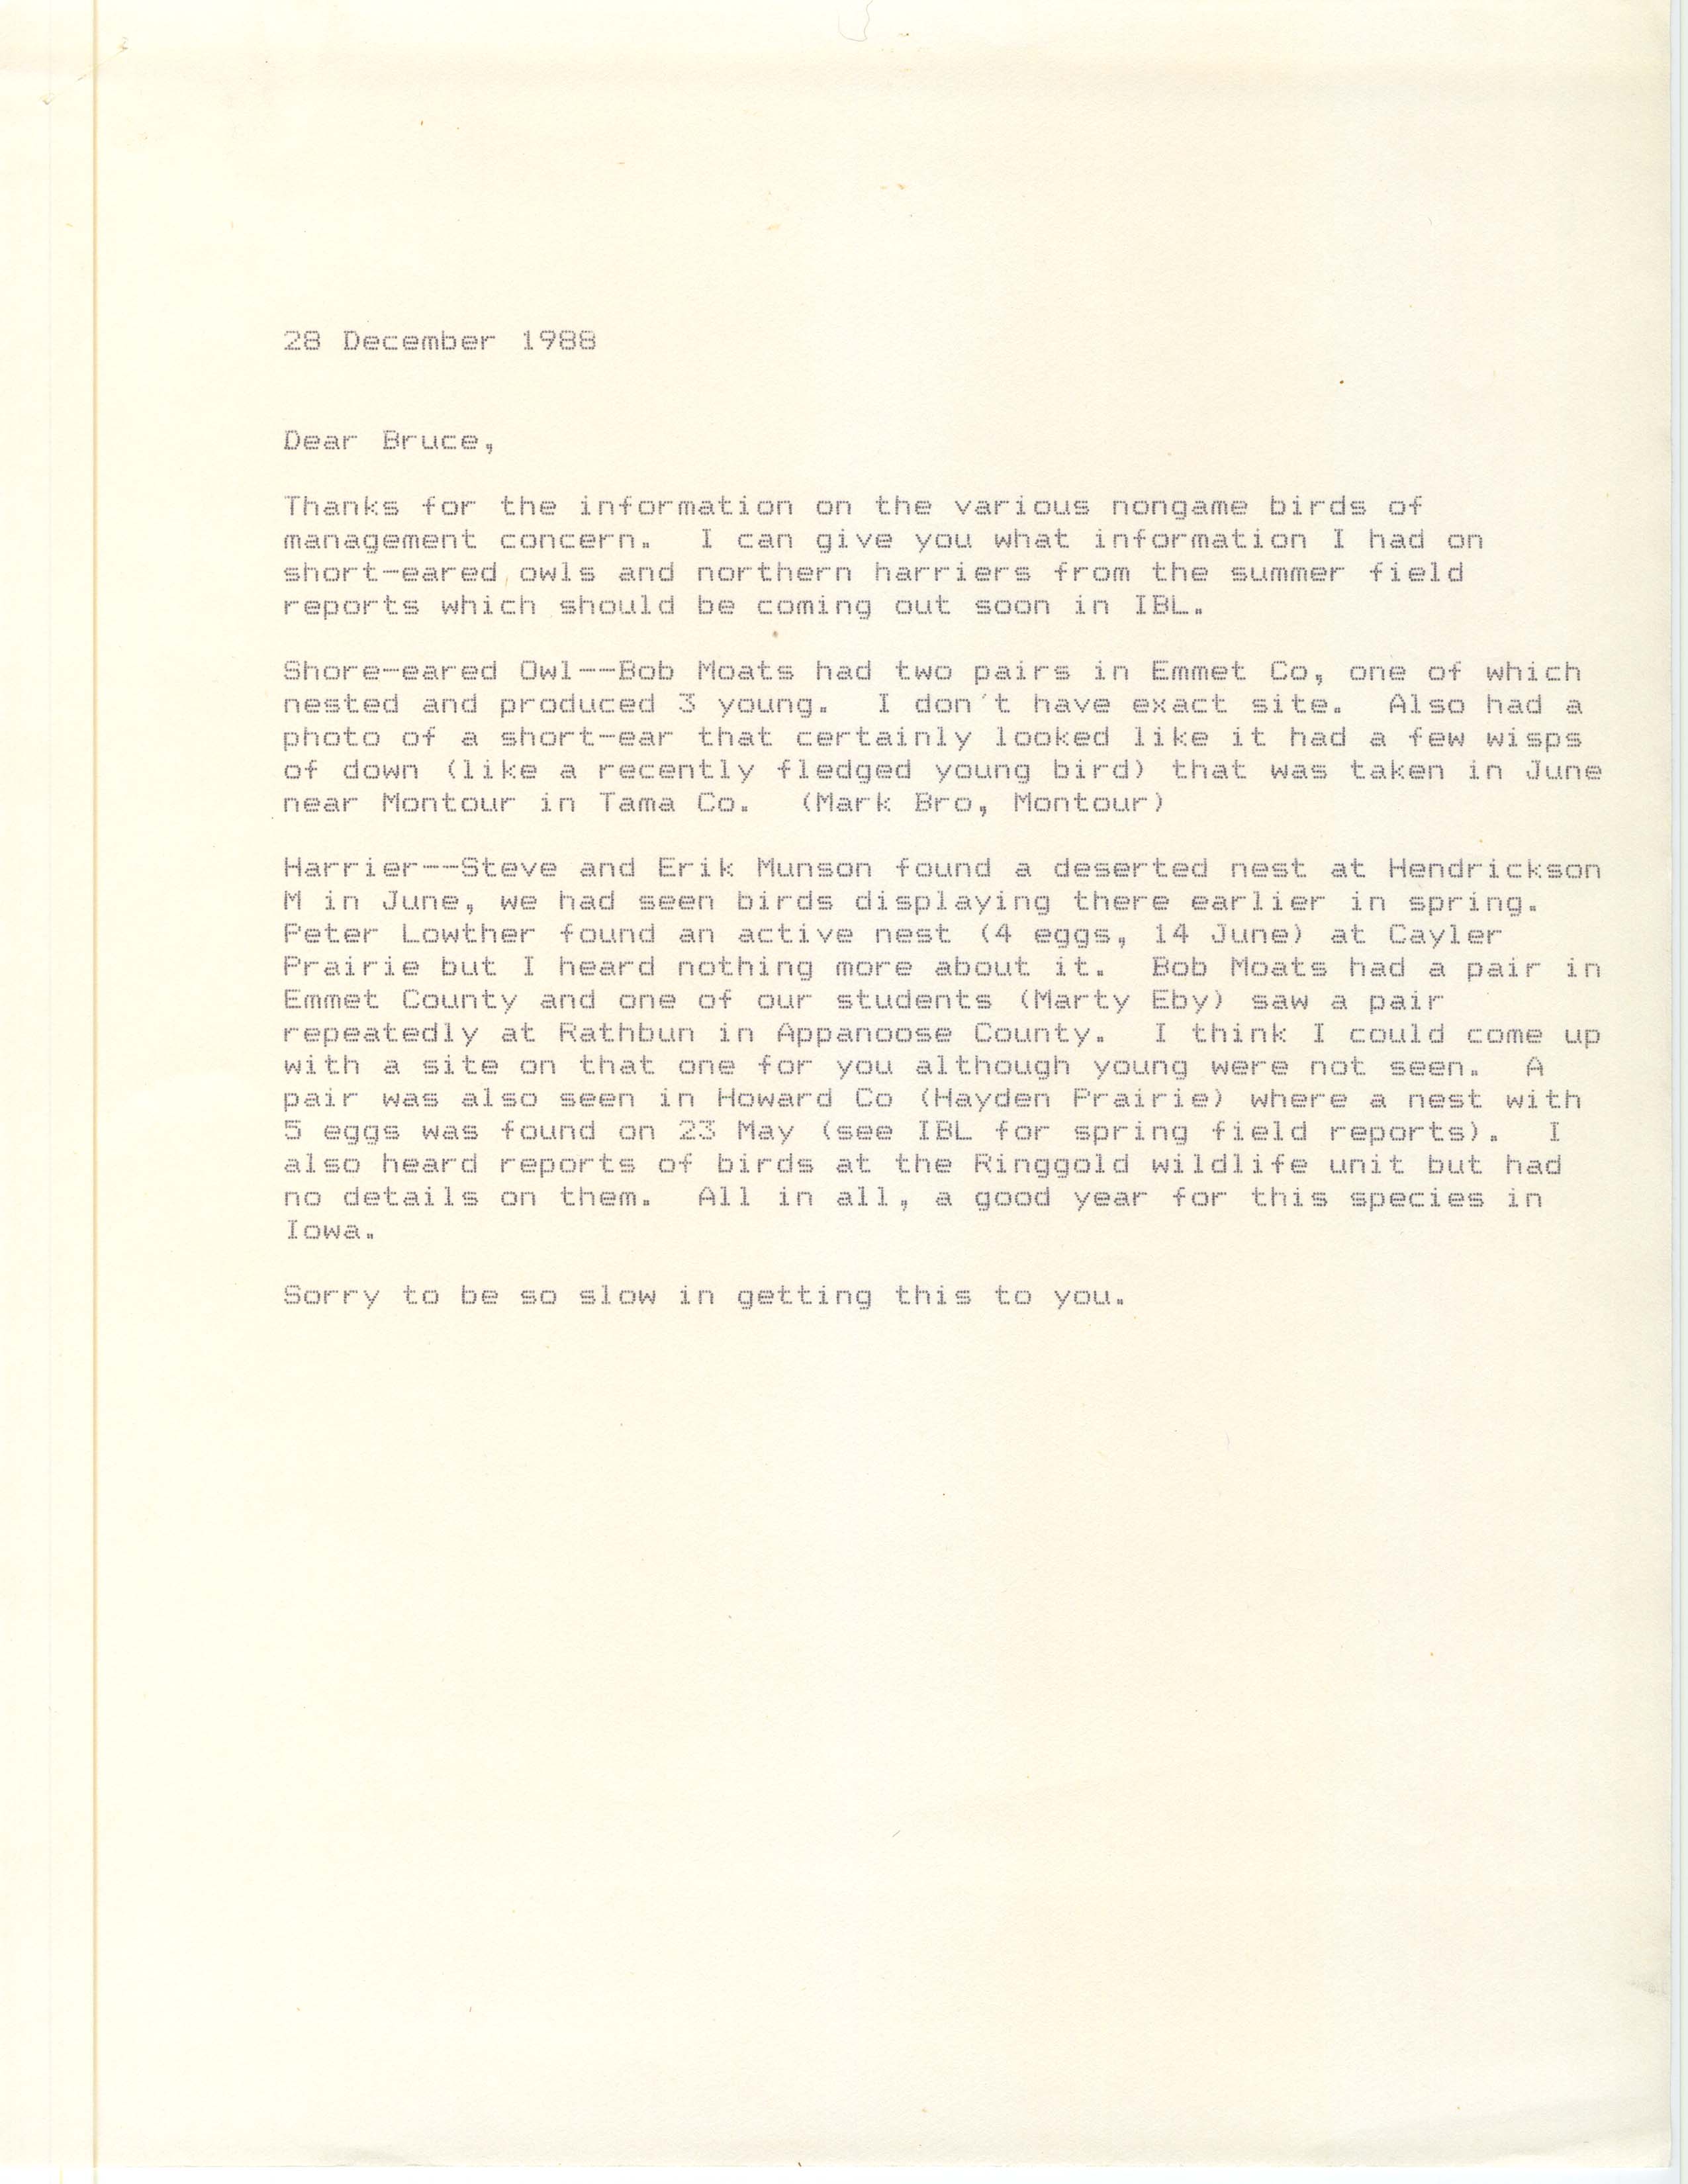 James J. Dinsmore letter to Bruce Ehresman regarding Short-eared Owls and Northern Harriers , December 28, 1988